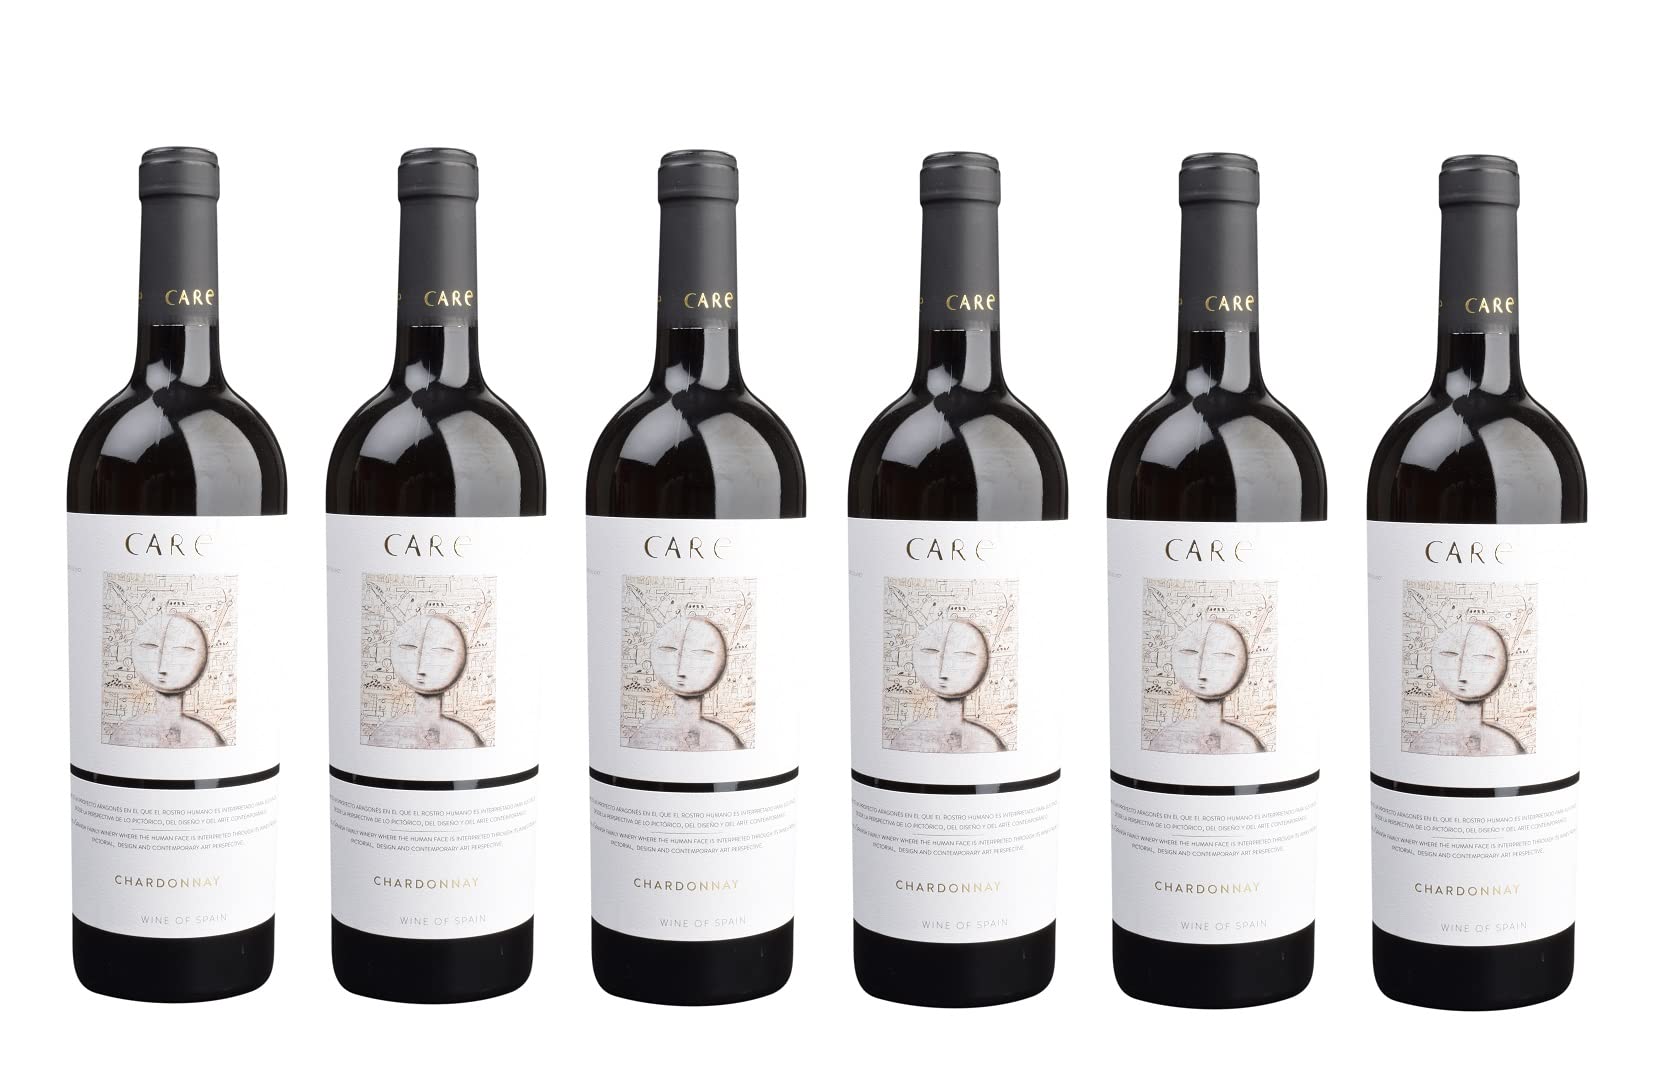 6x 0,75l - Care - Chardonnay - Cariñena D.O. - Spanien - Weißwein trocken